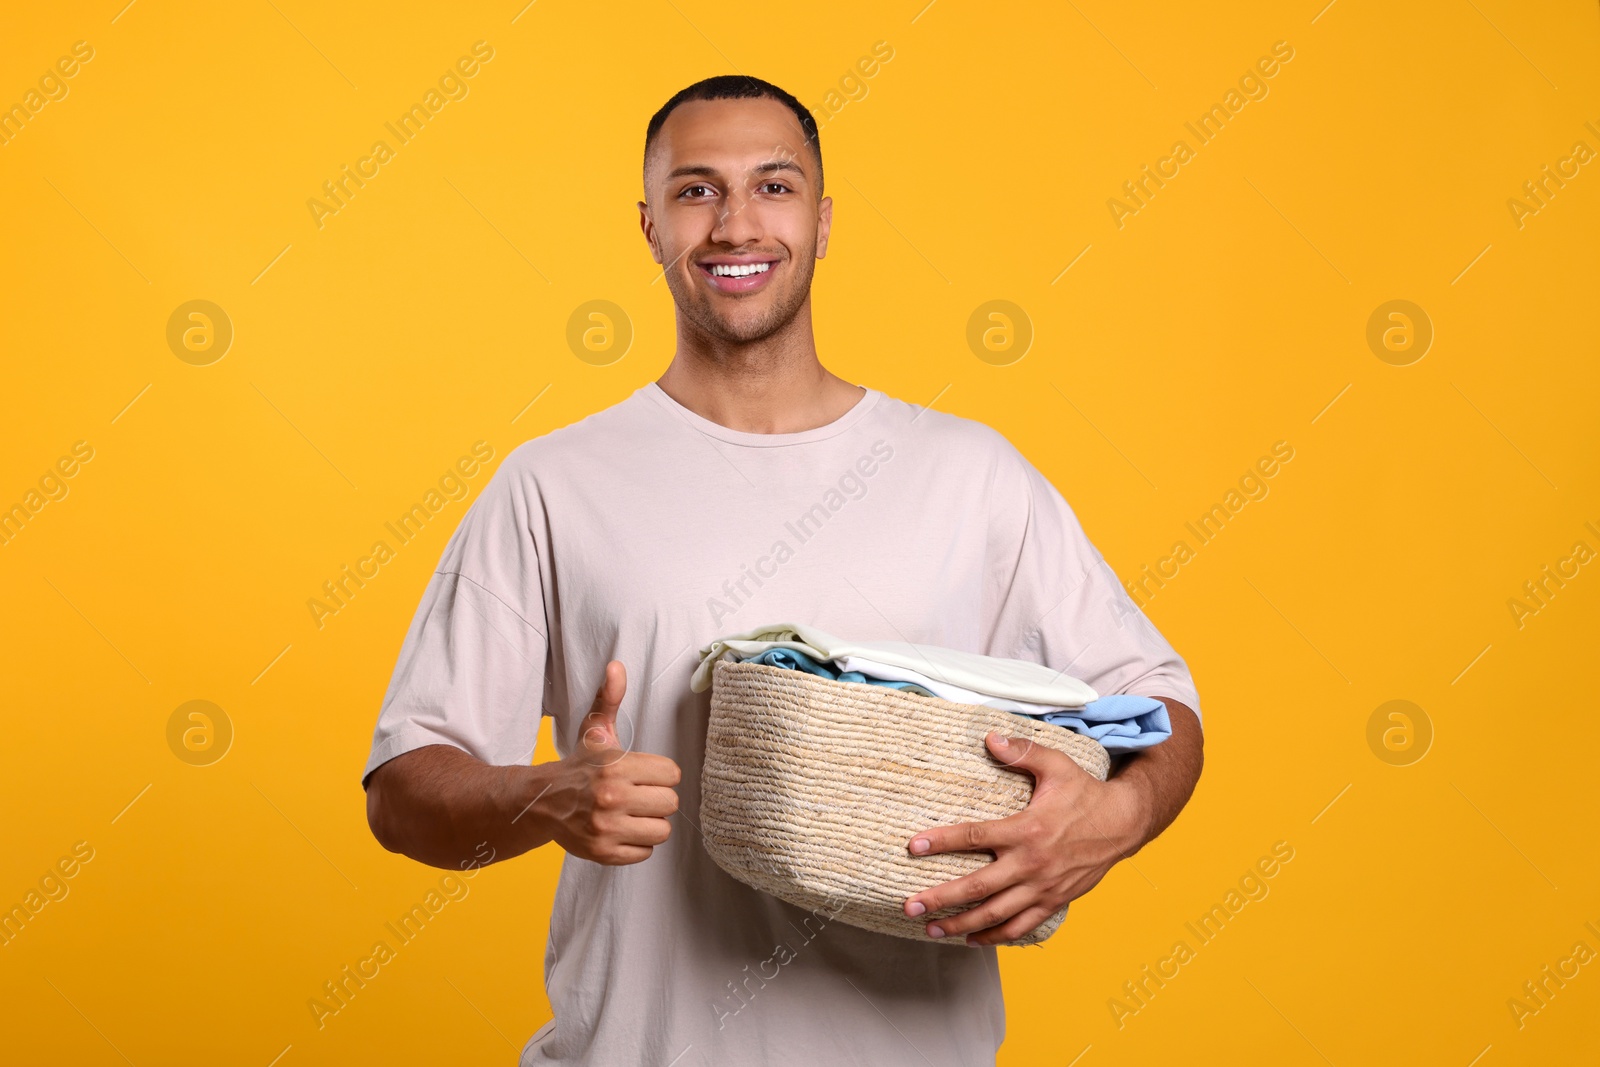 Photo of Happy man with basket full of laundry showing thumb up on orange background